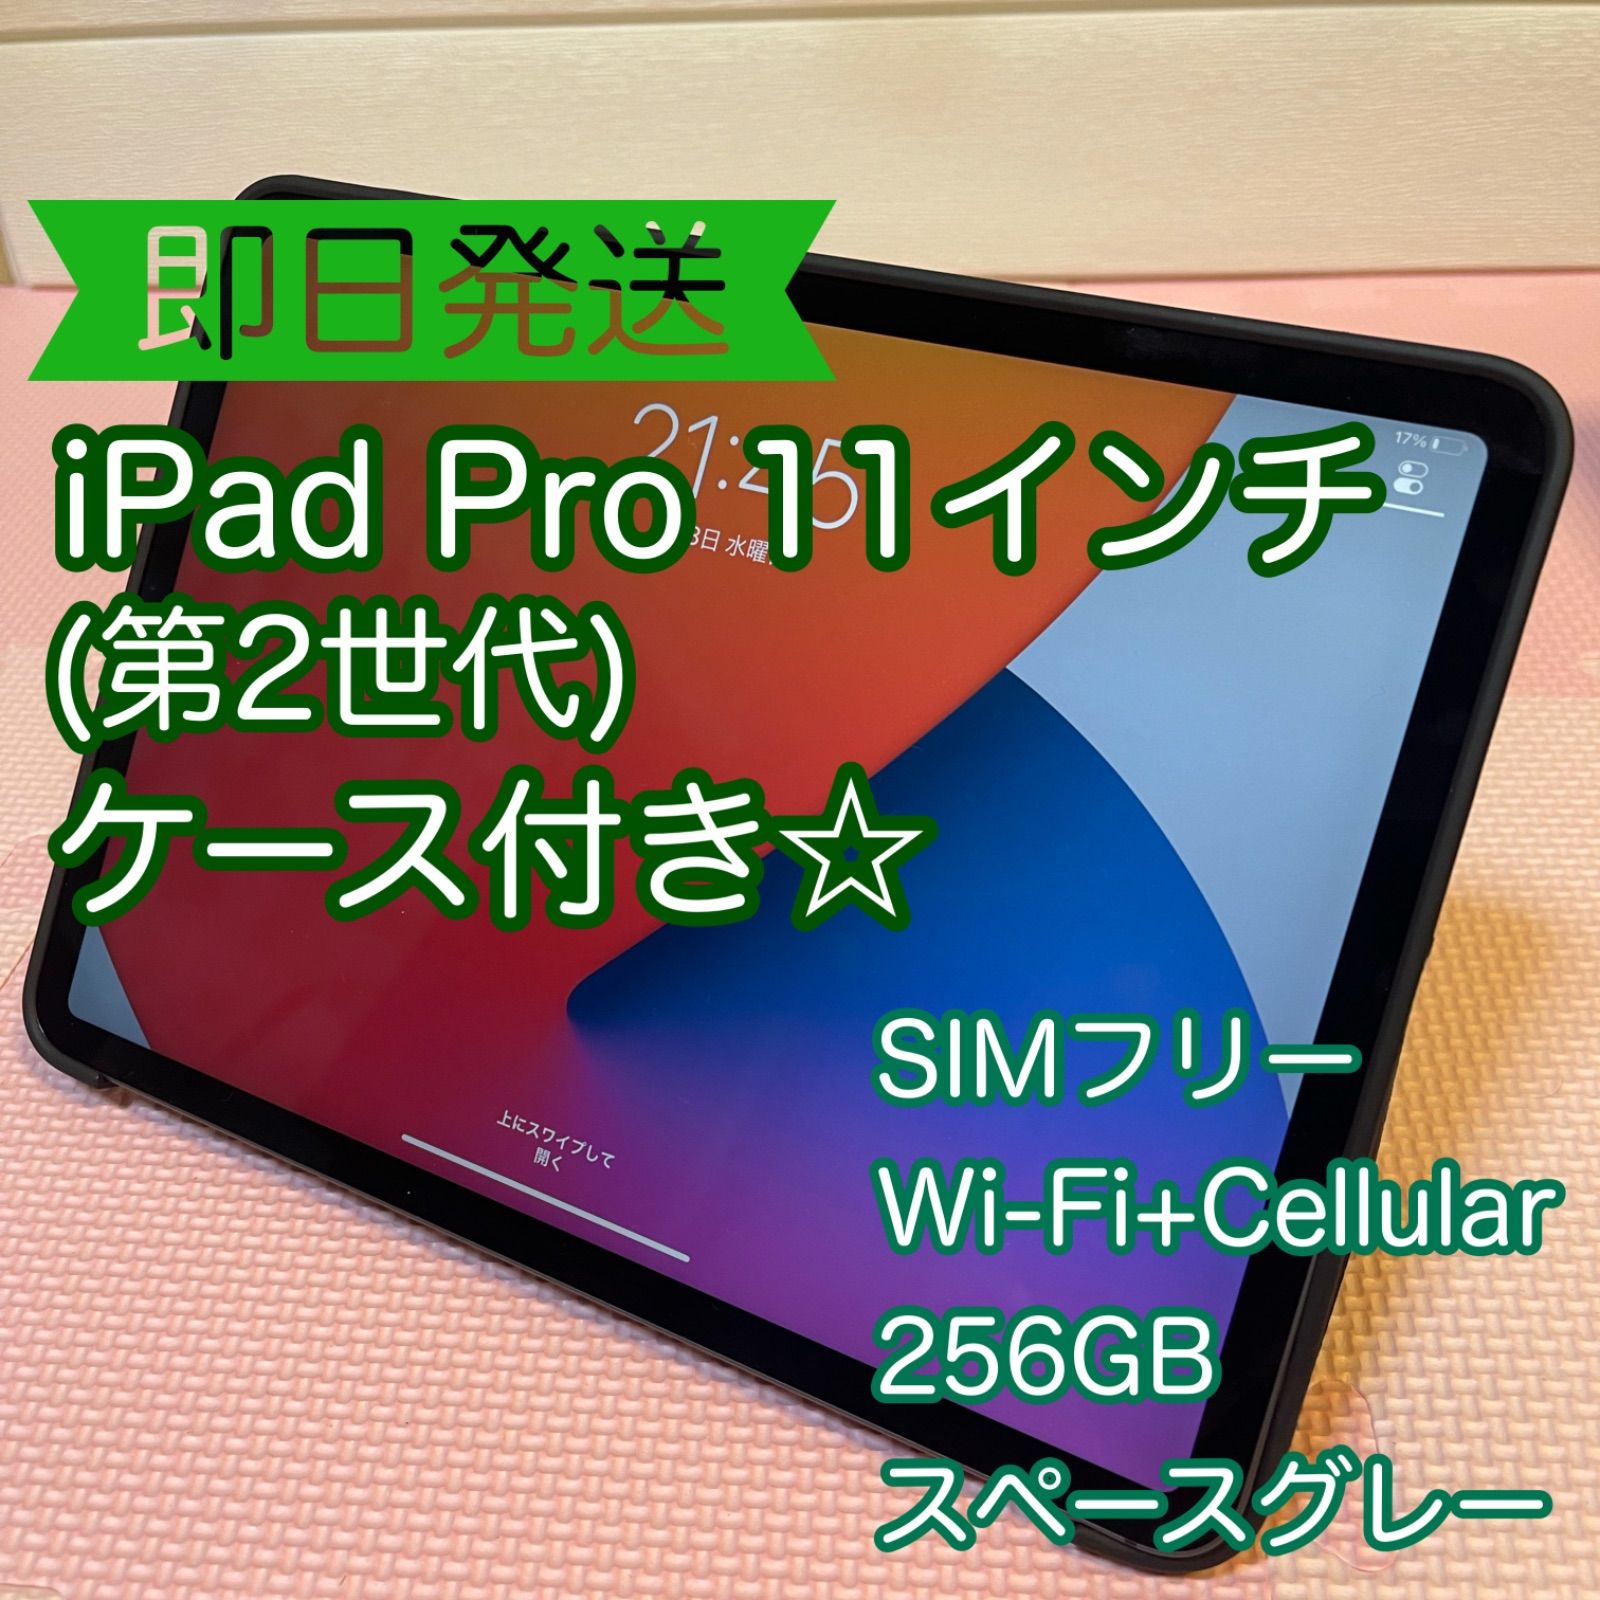 iPadPro 第2世代 11インチ 256GB WiFi+ Cellular